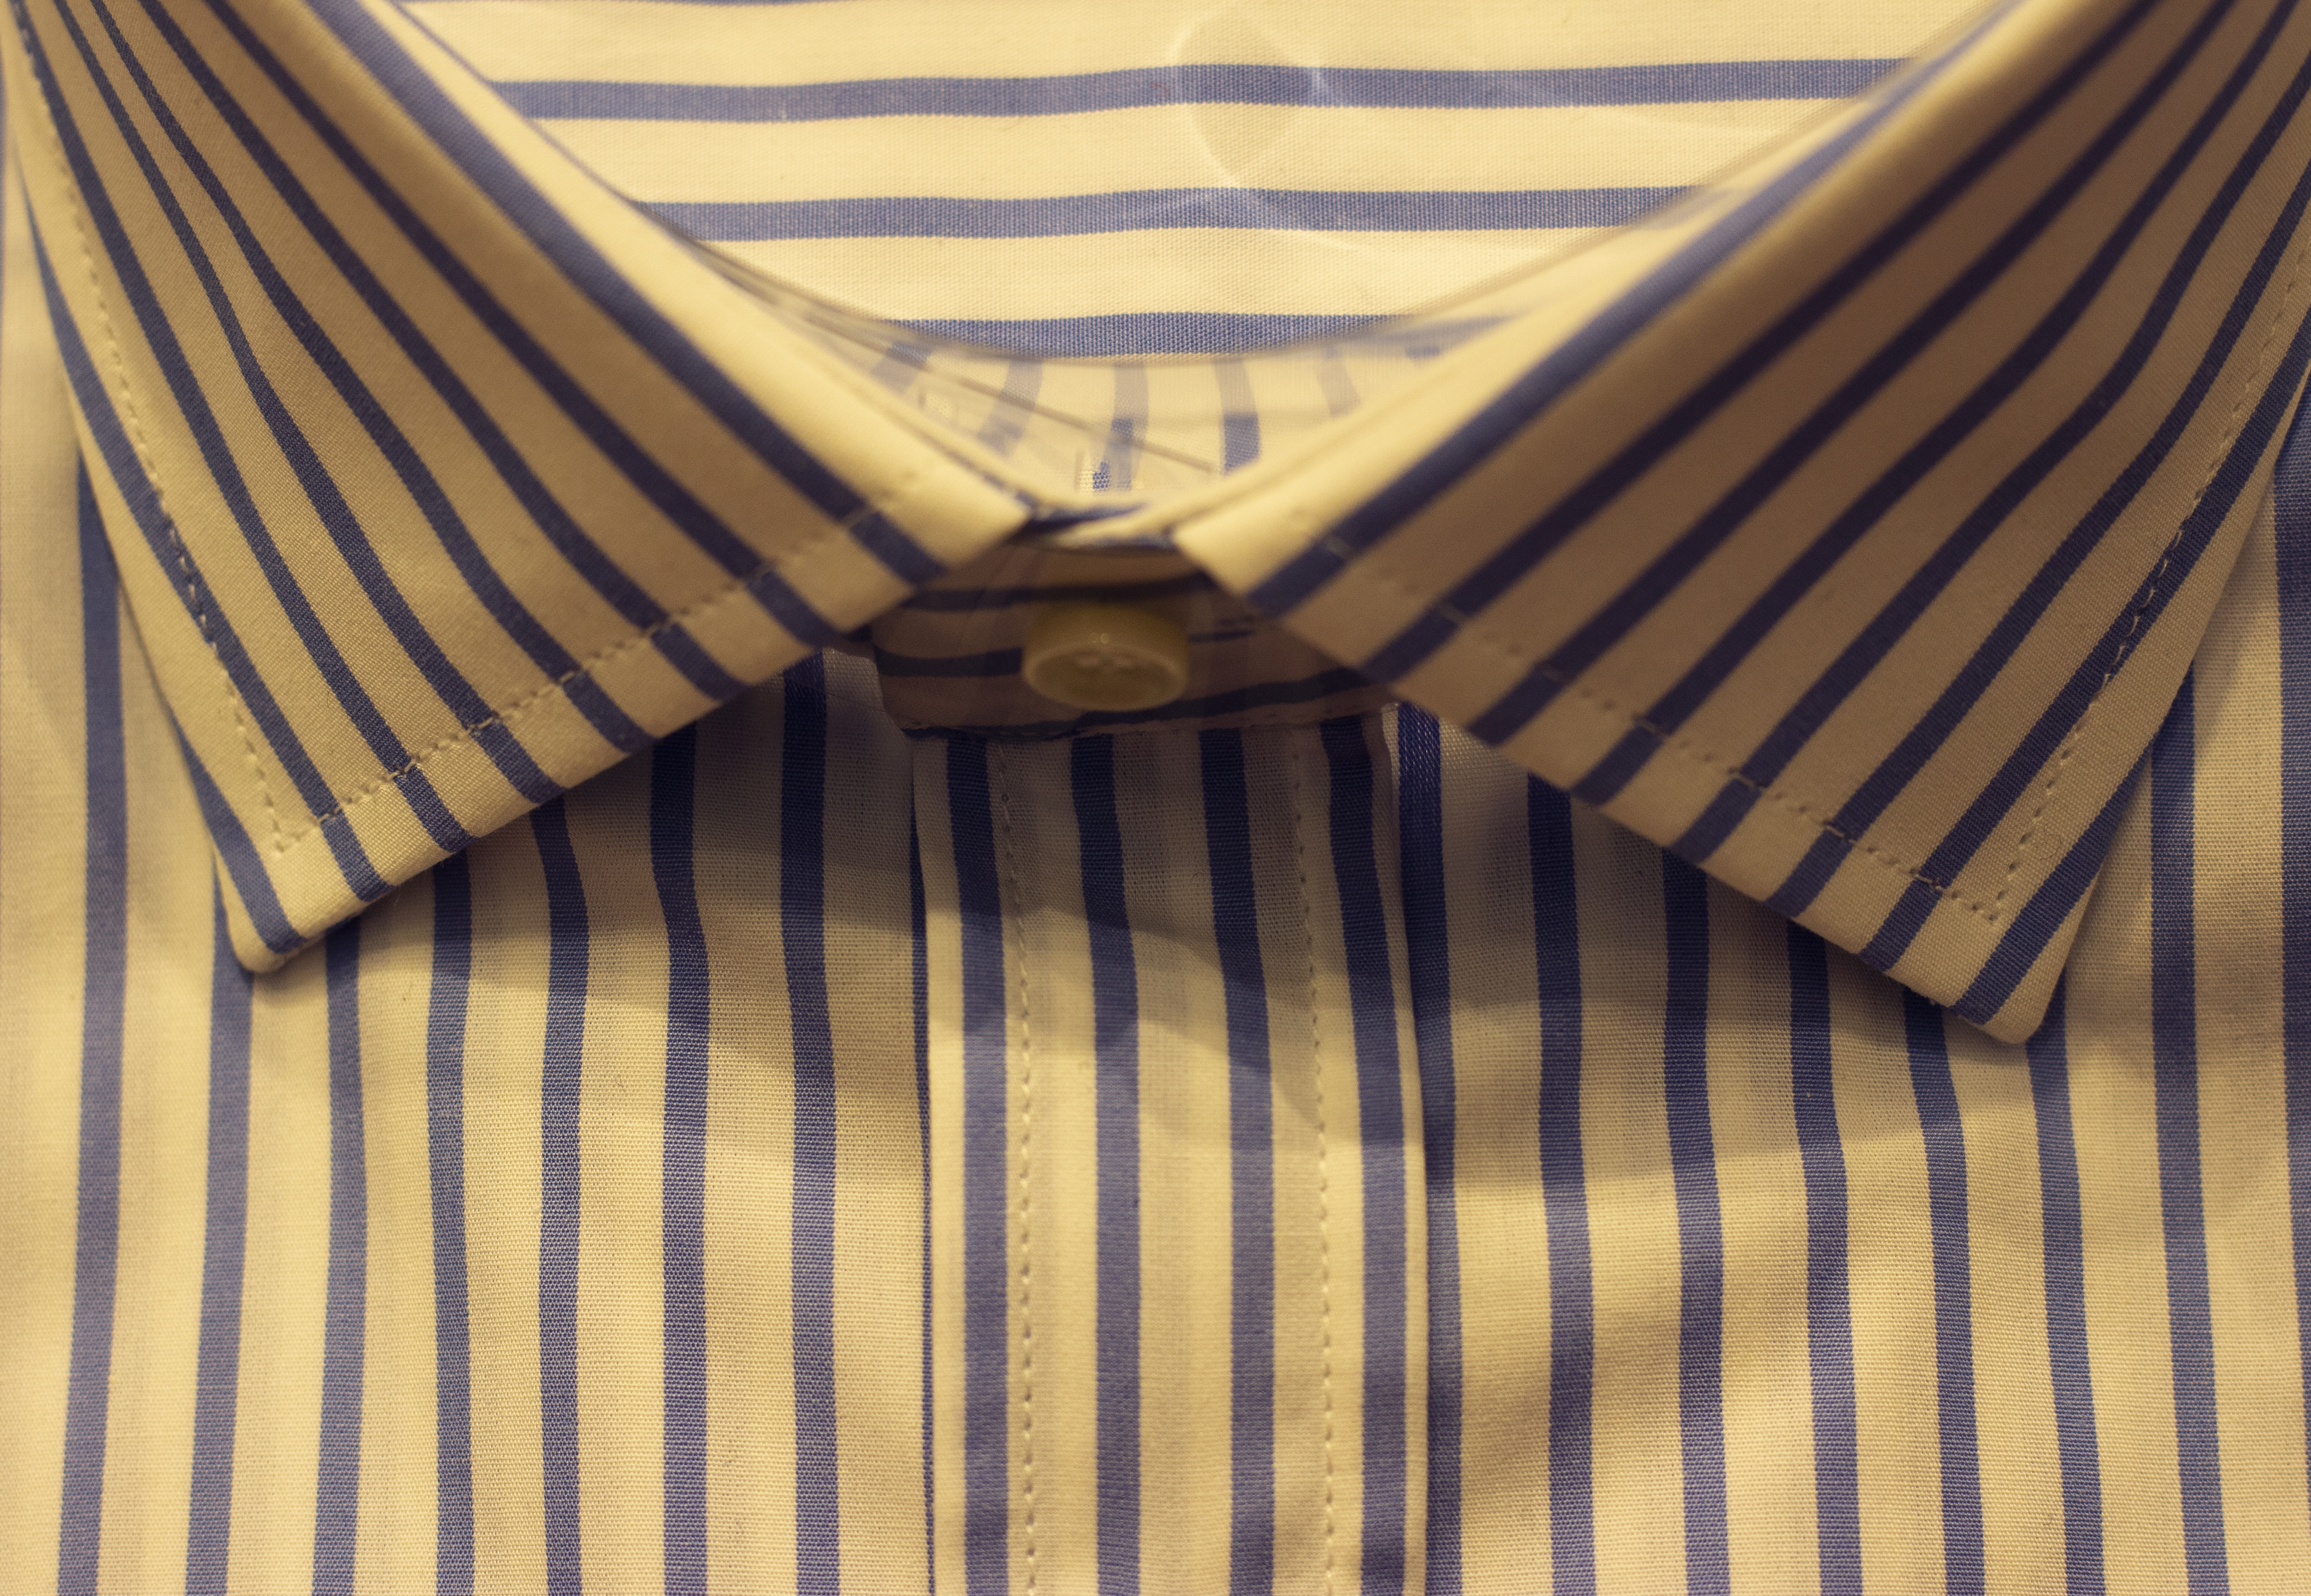 men's clothing button down medium spread shirt